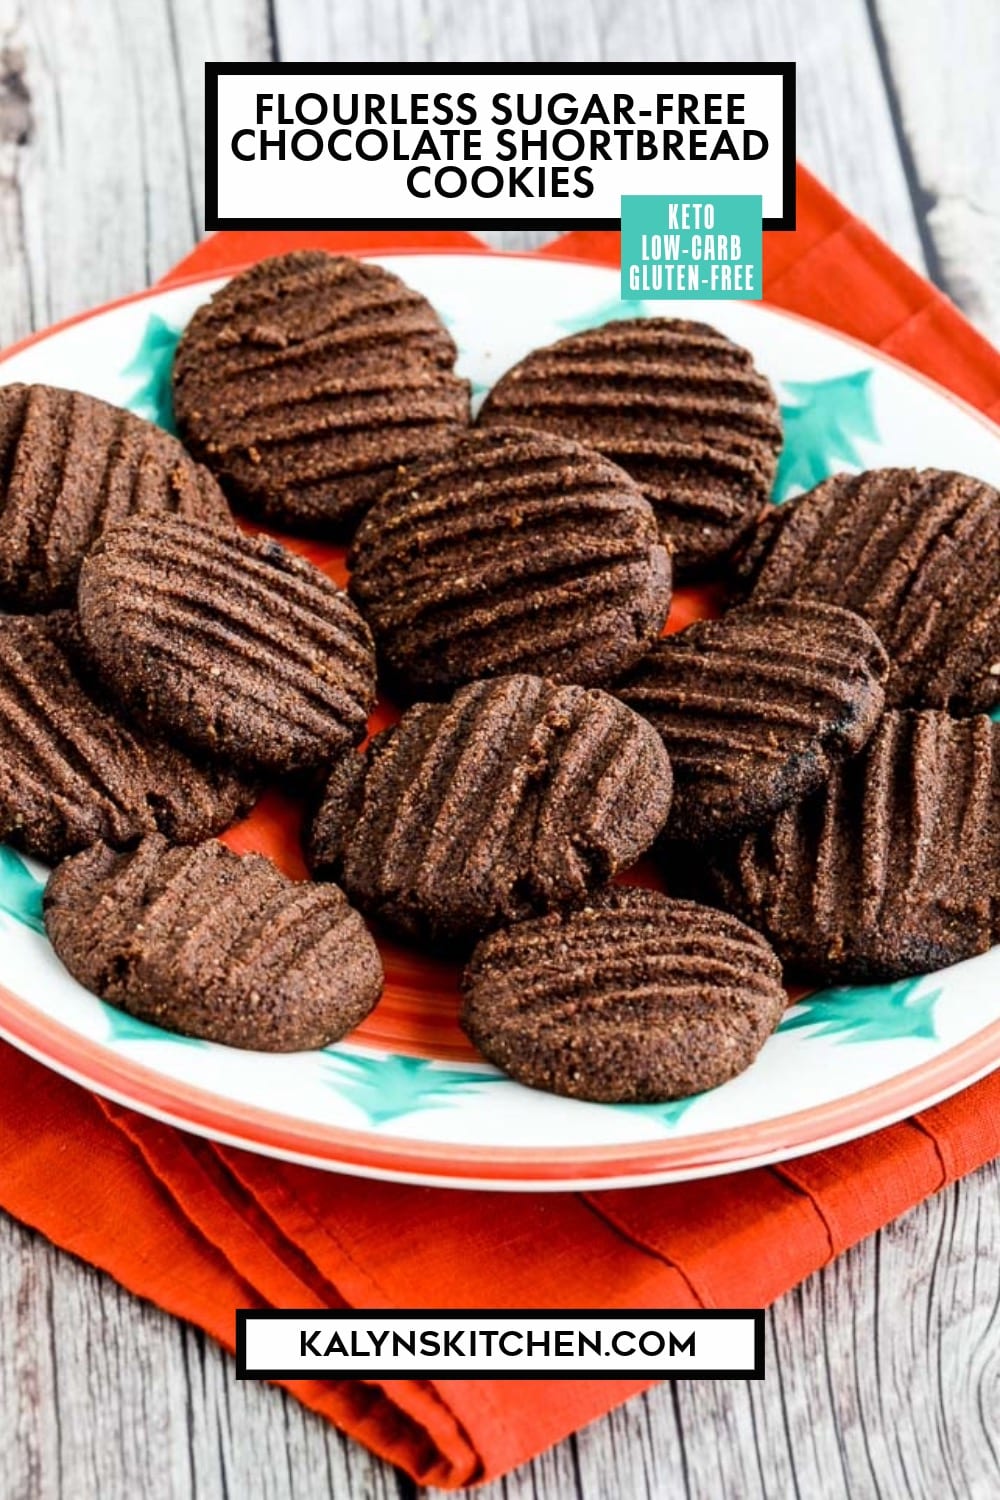 Pinterest image of Flourless Sugar-Free Chocolate Shortbread Cookies